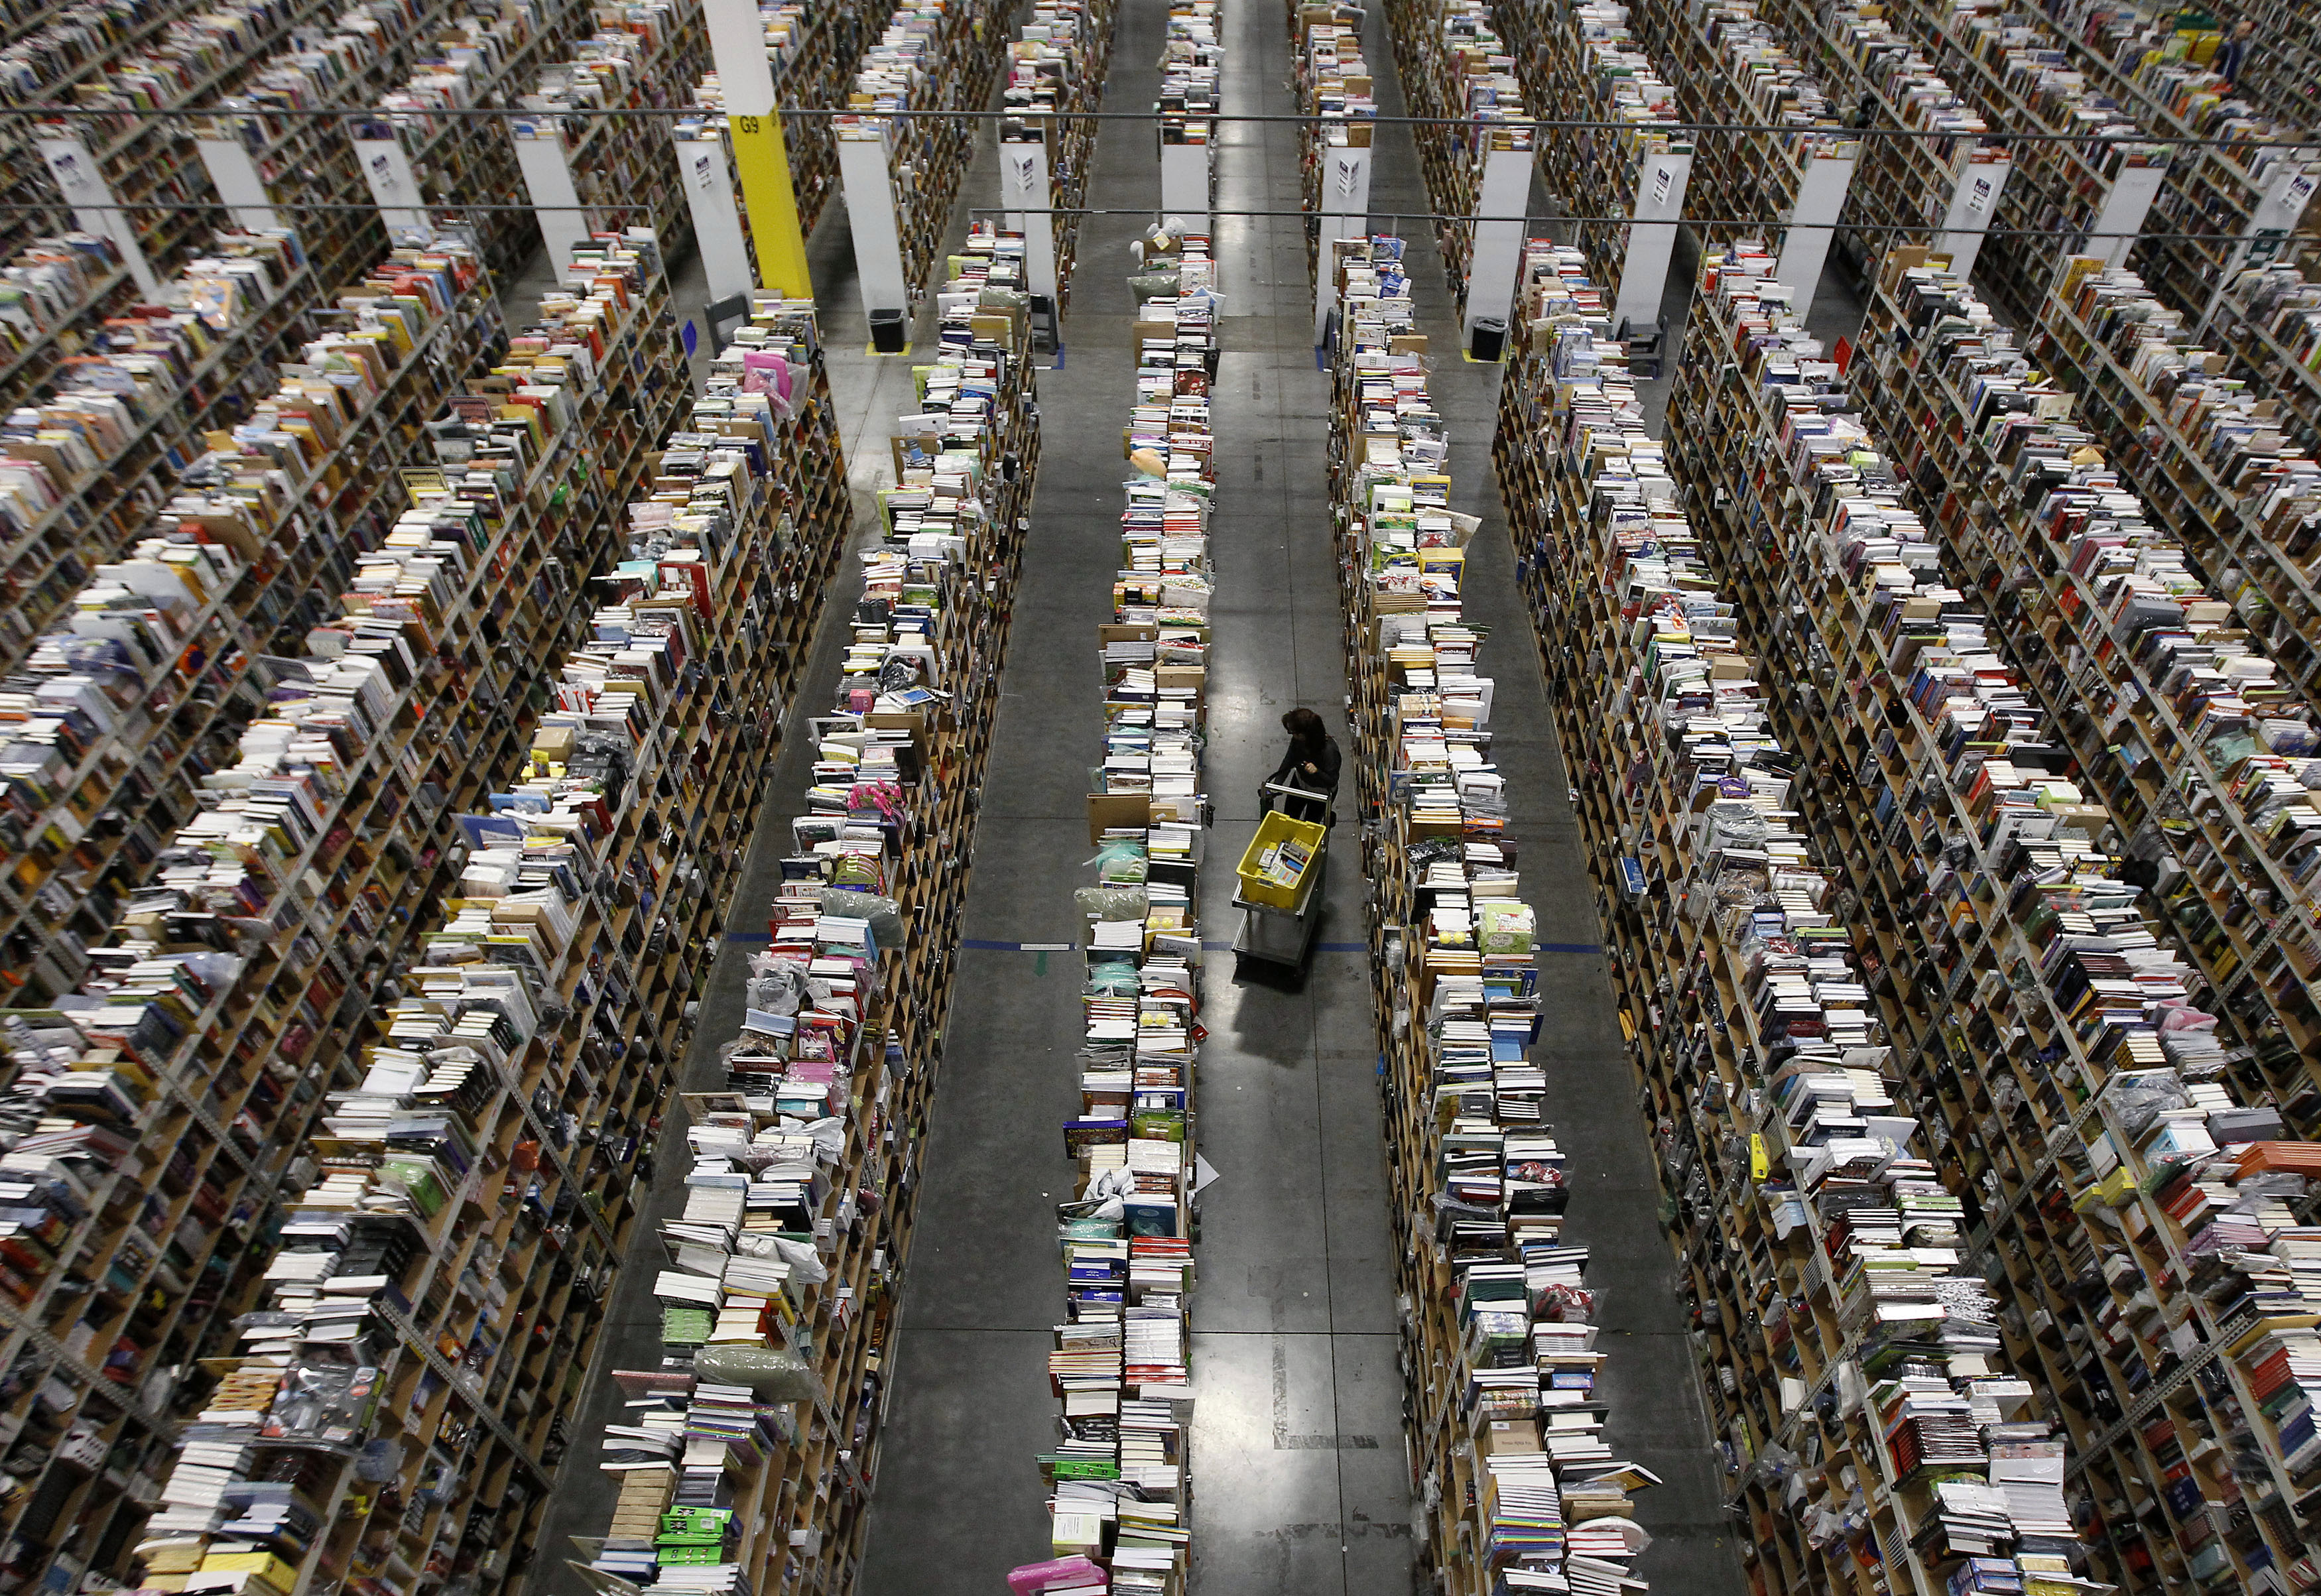 An Amazon warehouse in Arizona.